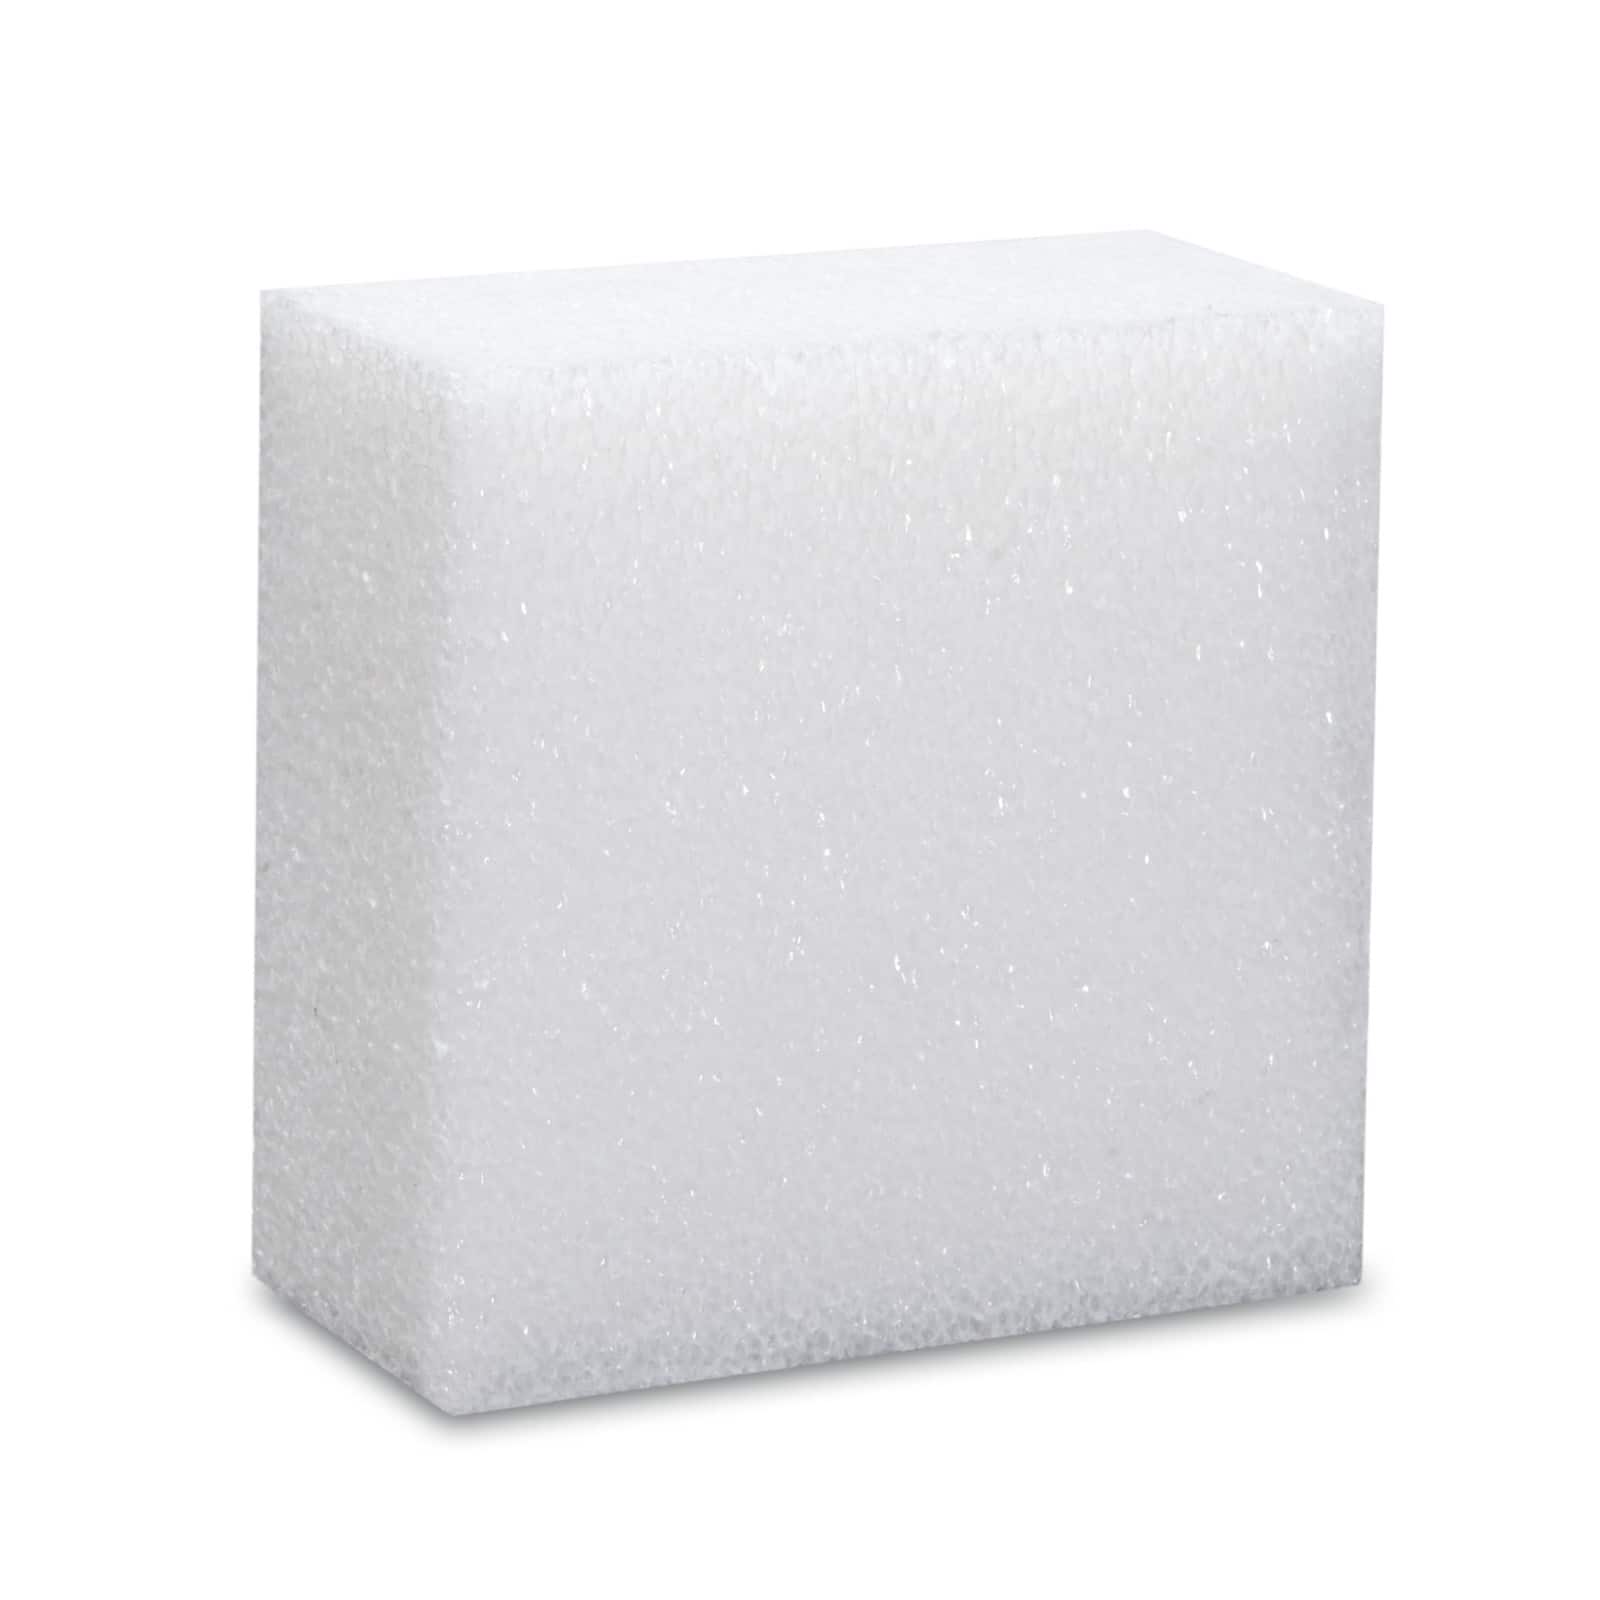 Floracraft Styrofoam Block 2x 4x 4 White